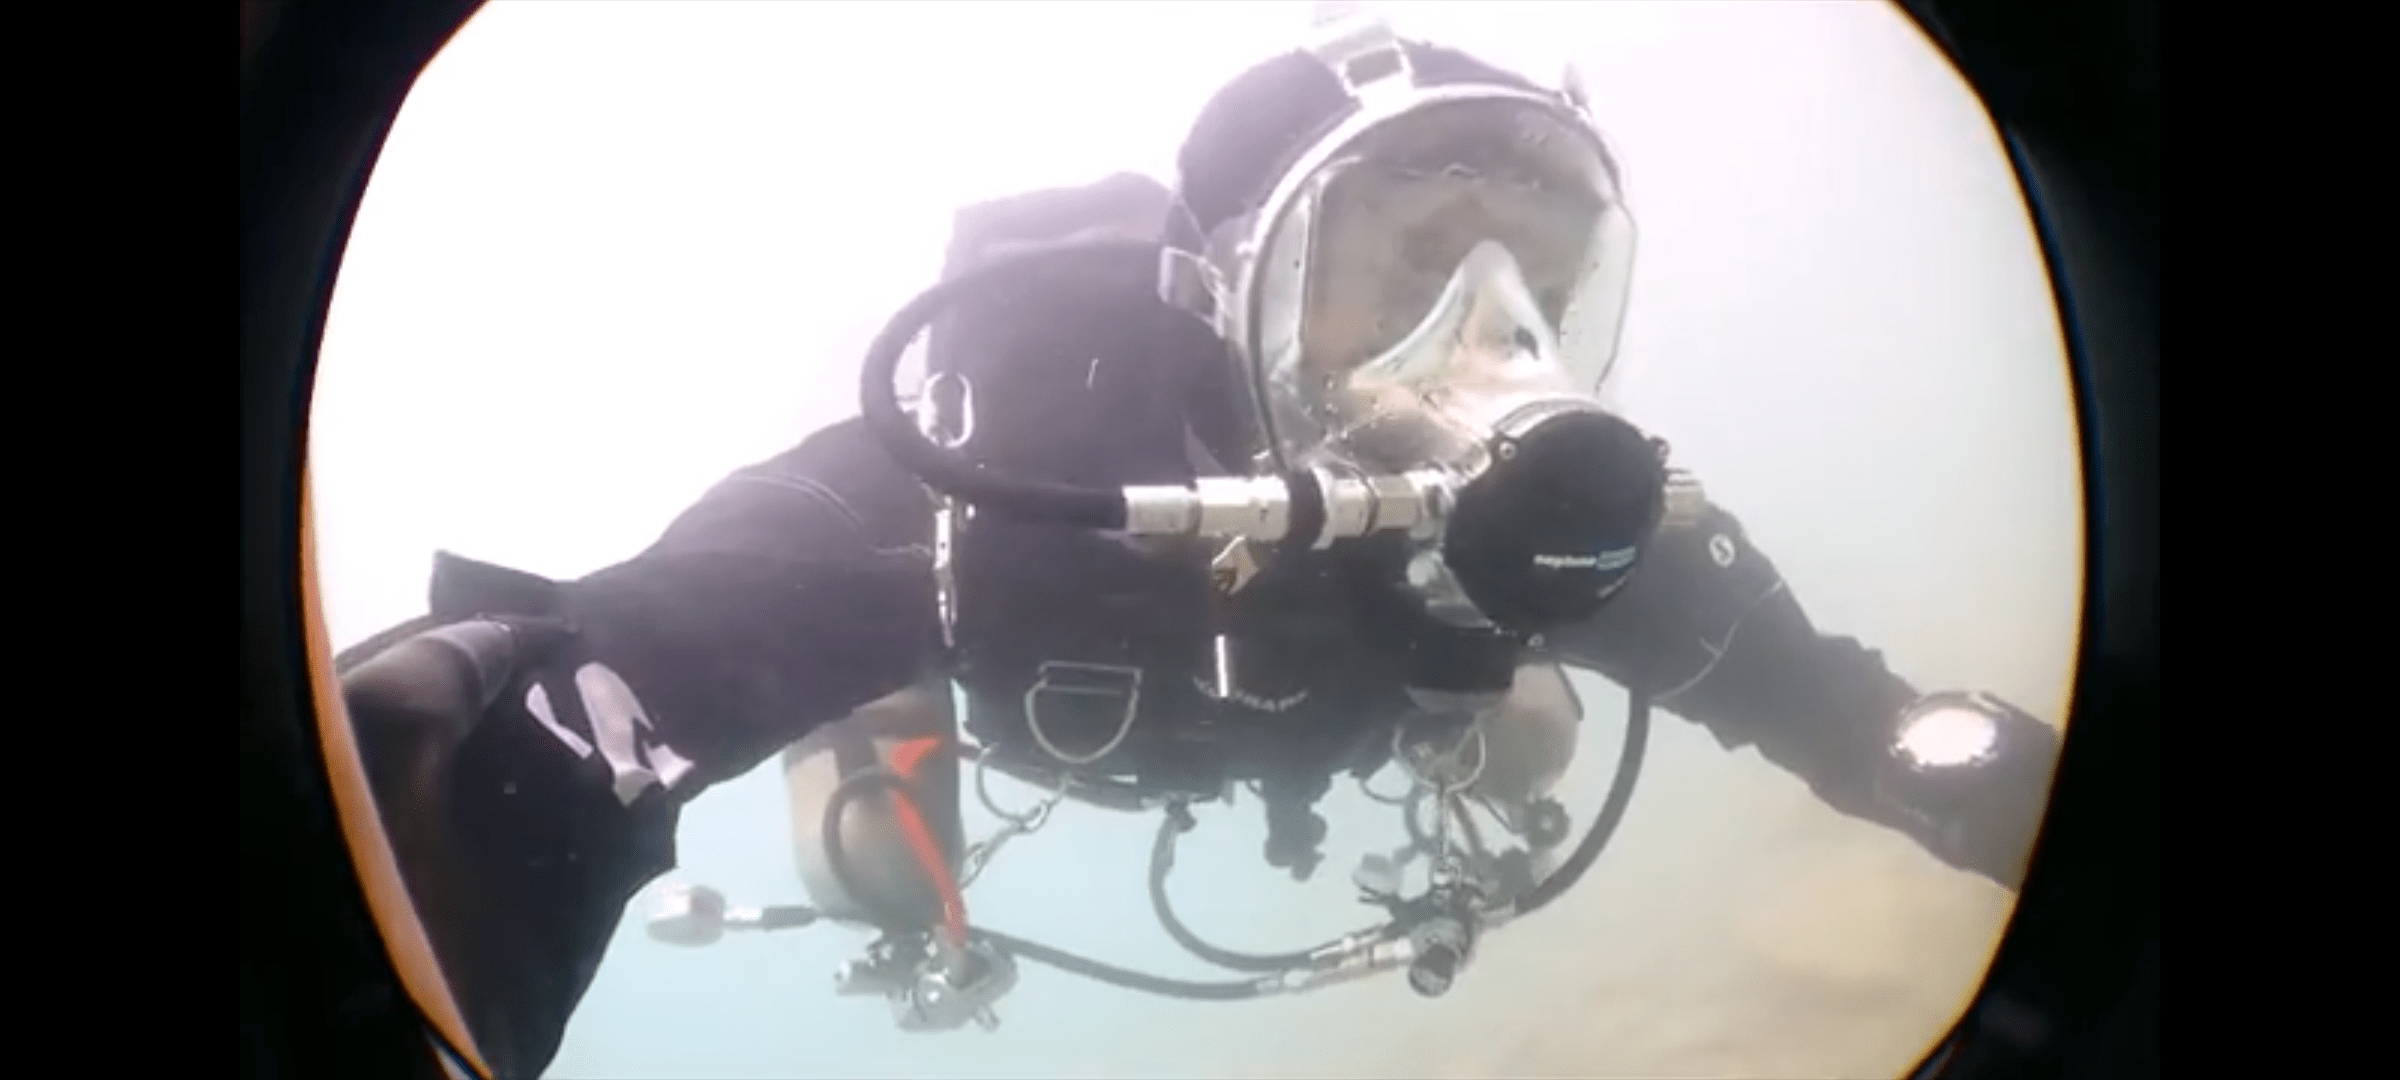 A sidemount diver in a full face masks